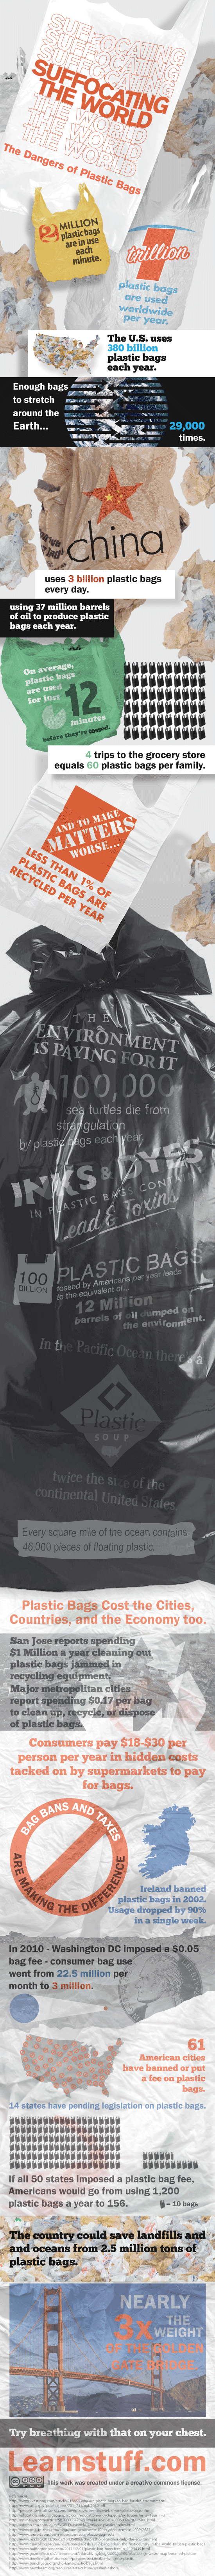 The dangers of plastic bags